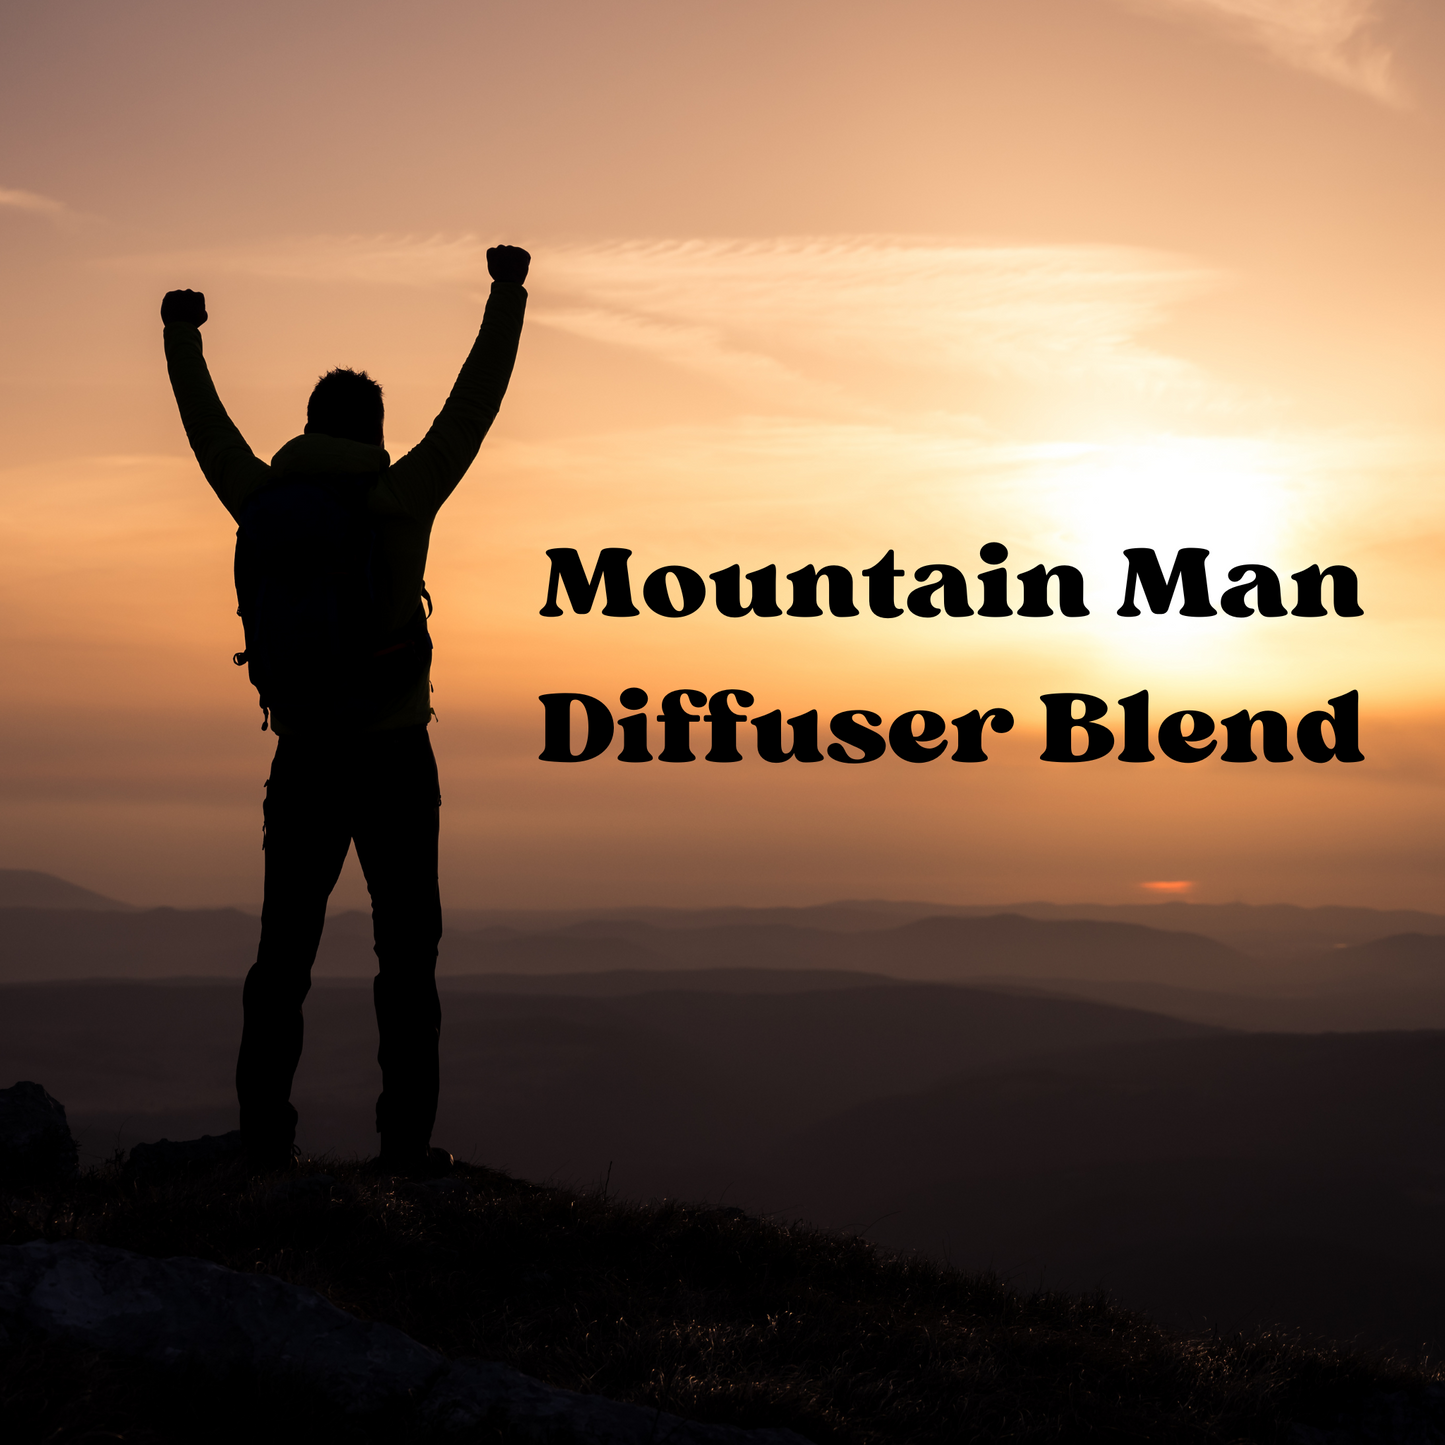 Mountain Man Diffuser Blend